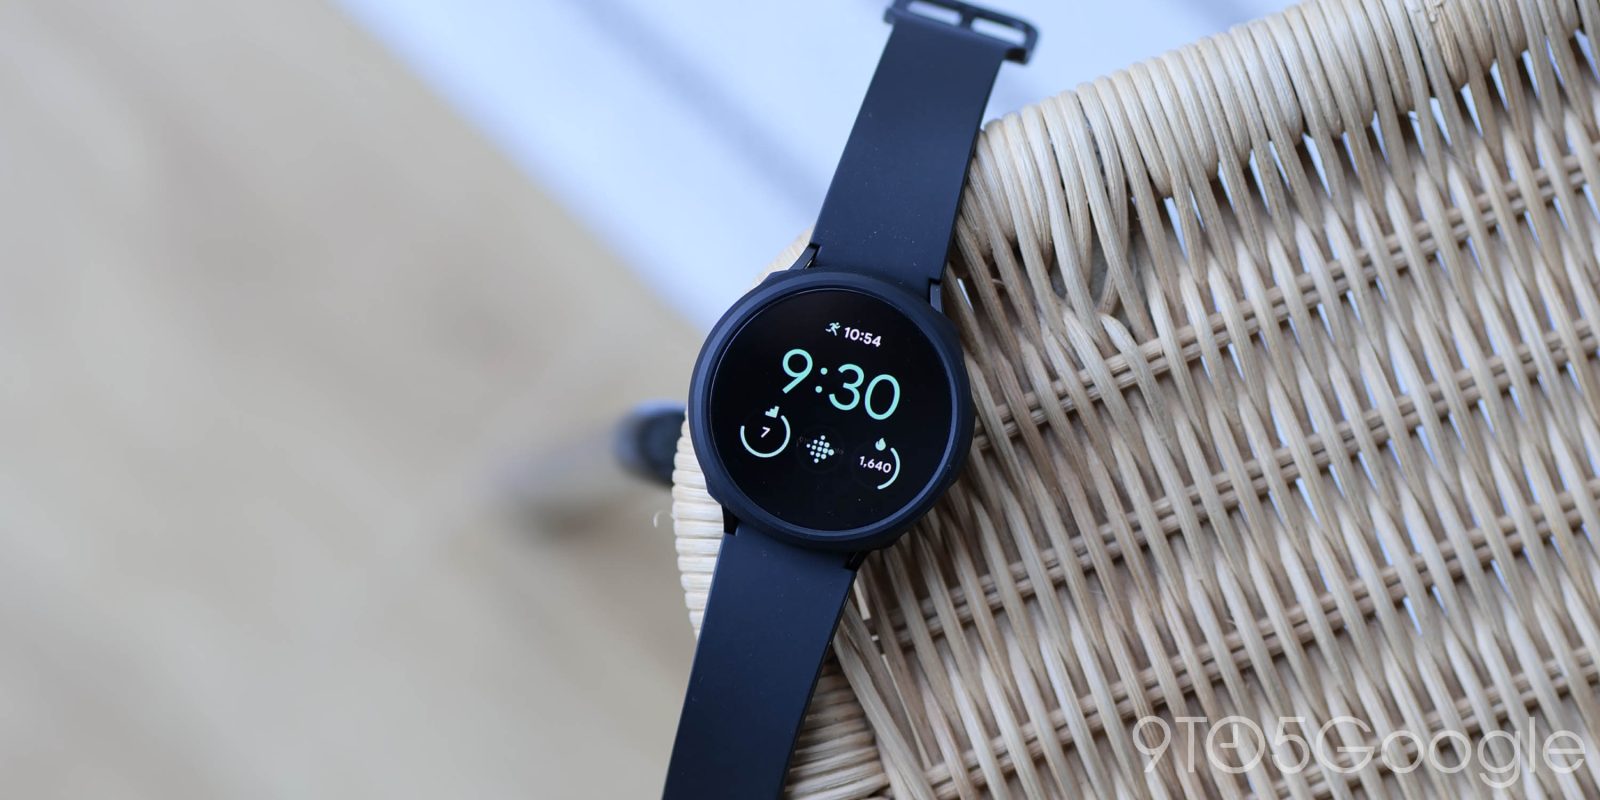 Google Pixel Watch face on a Galaxy Watch